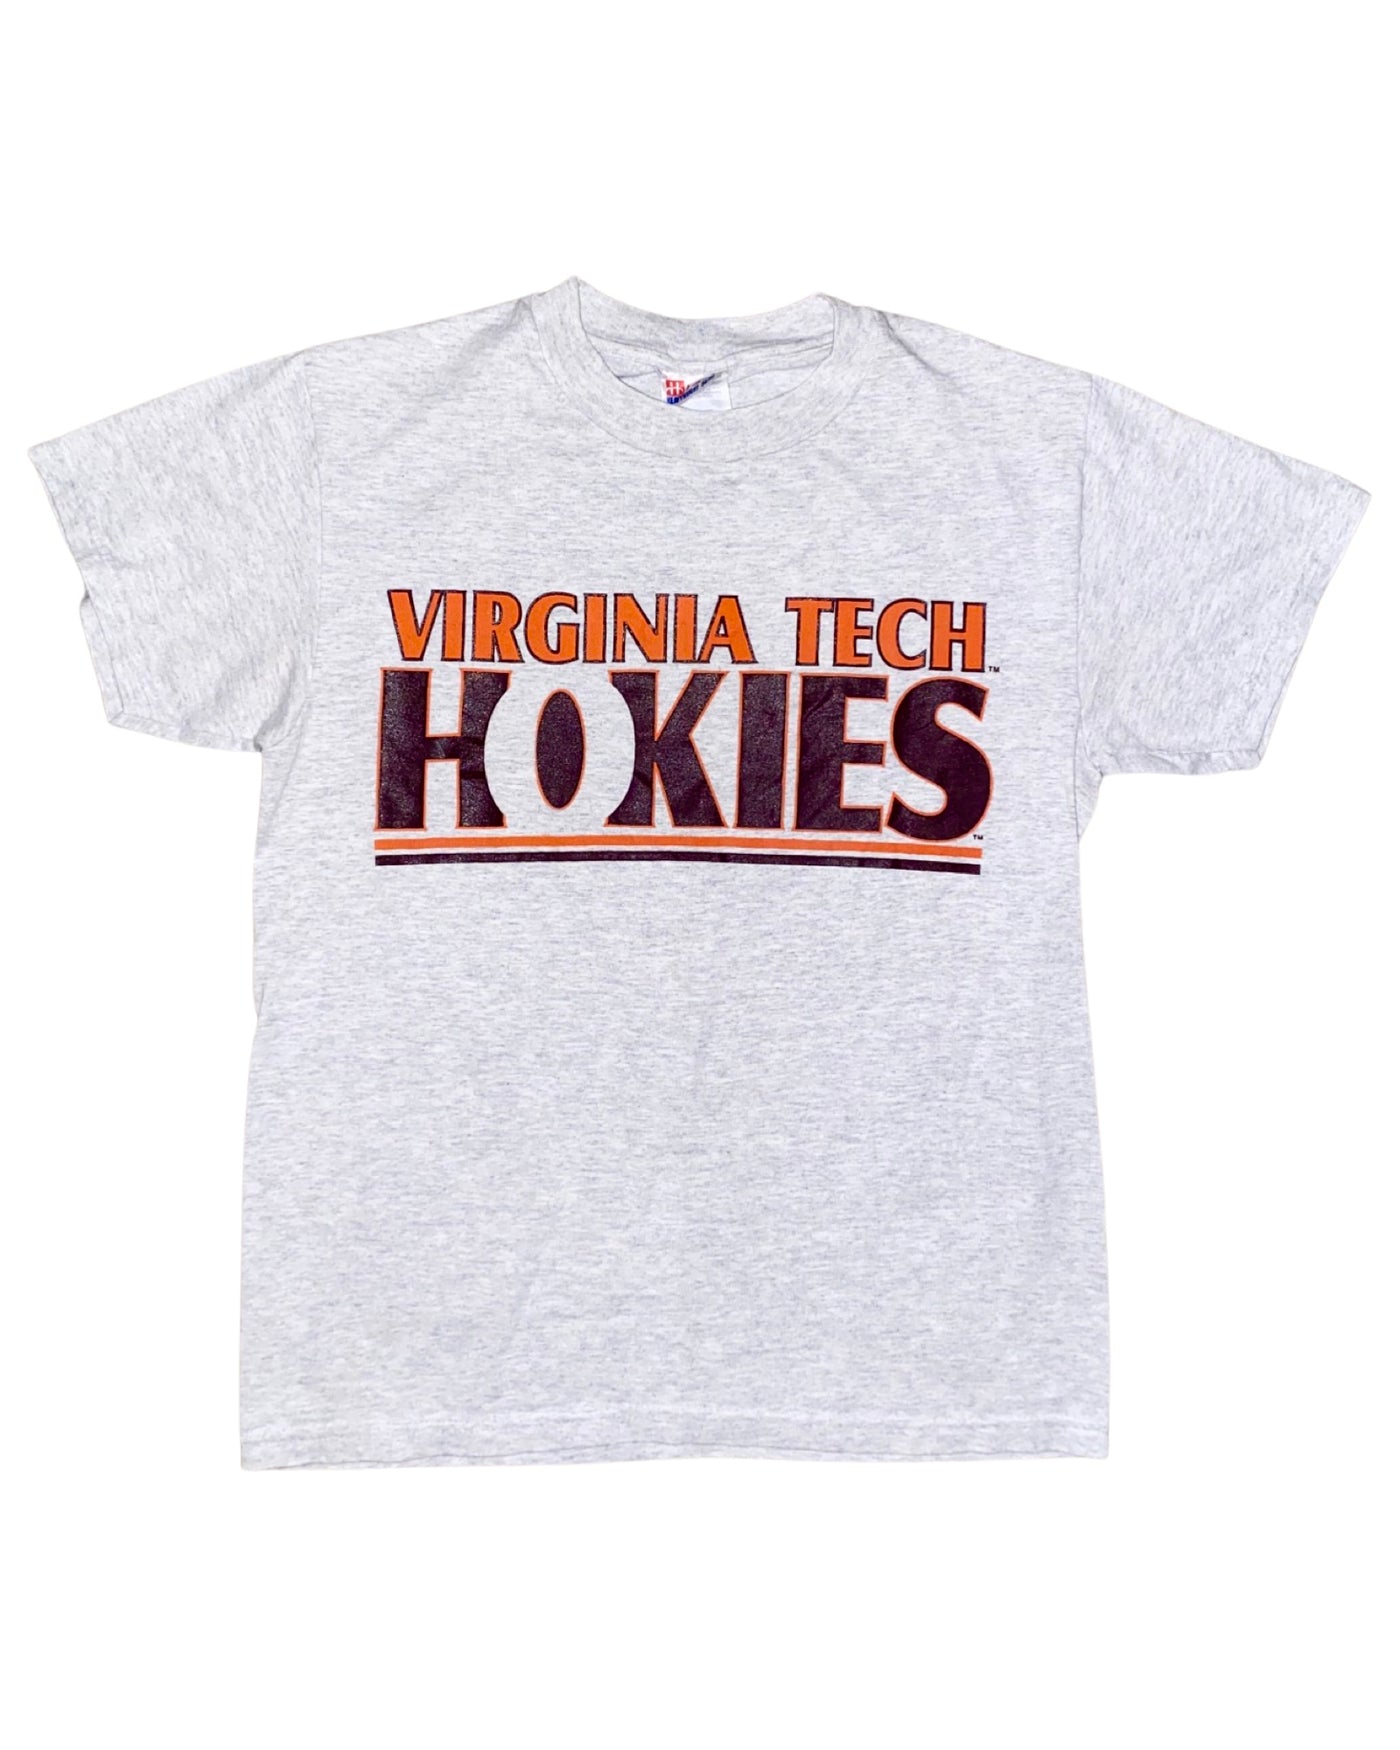 Vintage 90s Virginia Tech Hokies T-Shirt